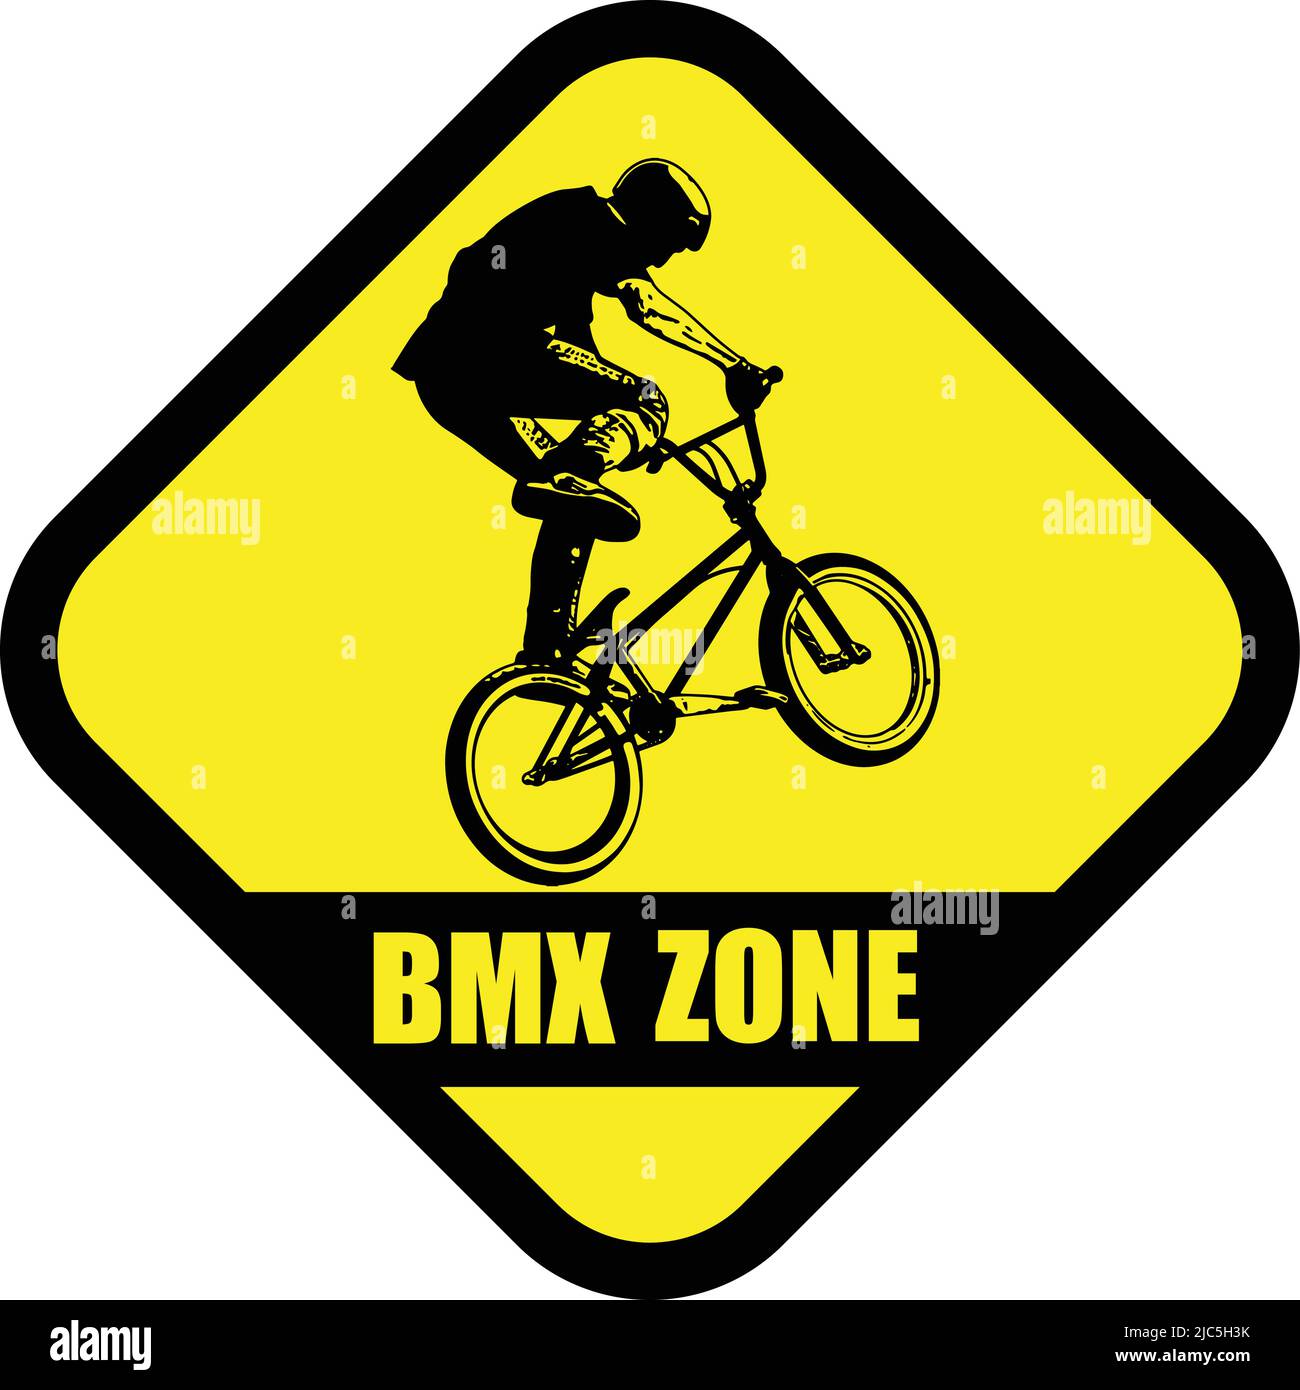 BMX zone traffic sign - vector artwork Stock Vector